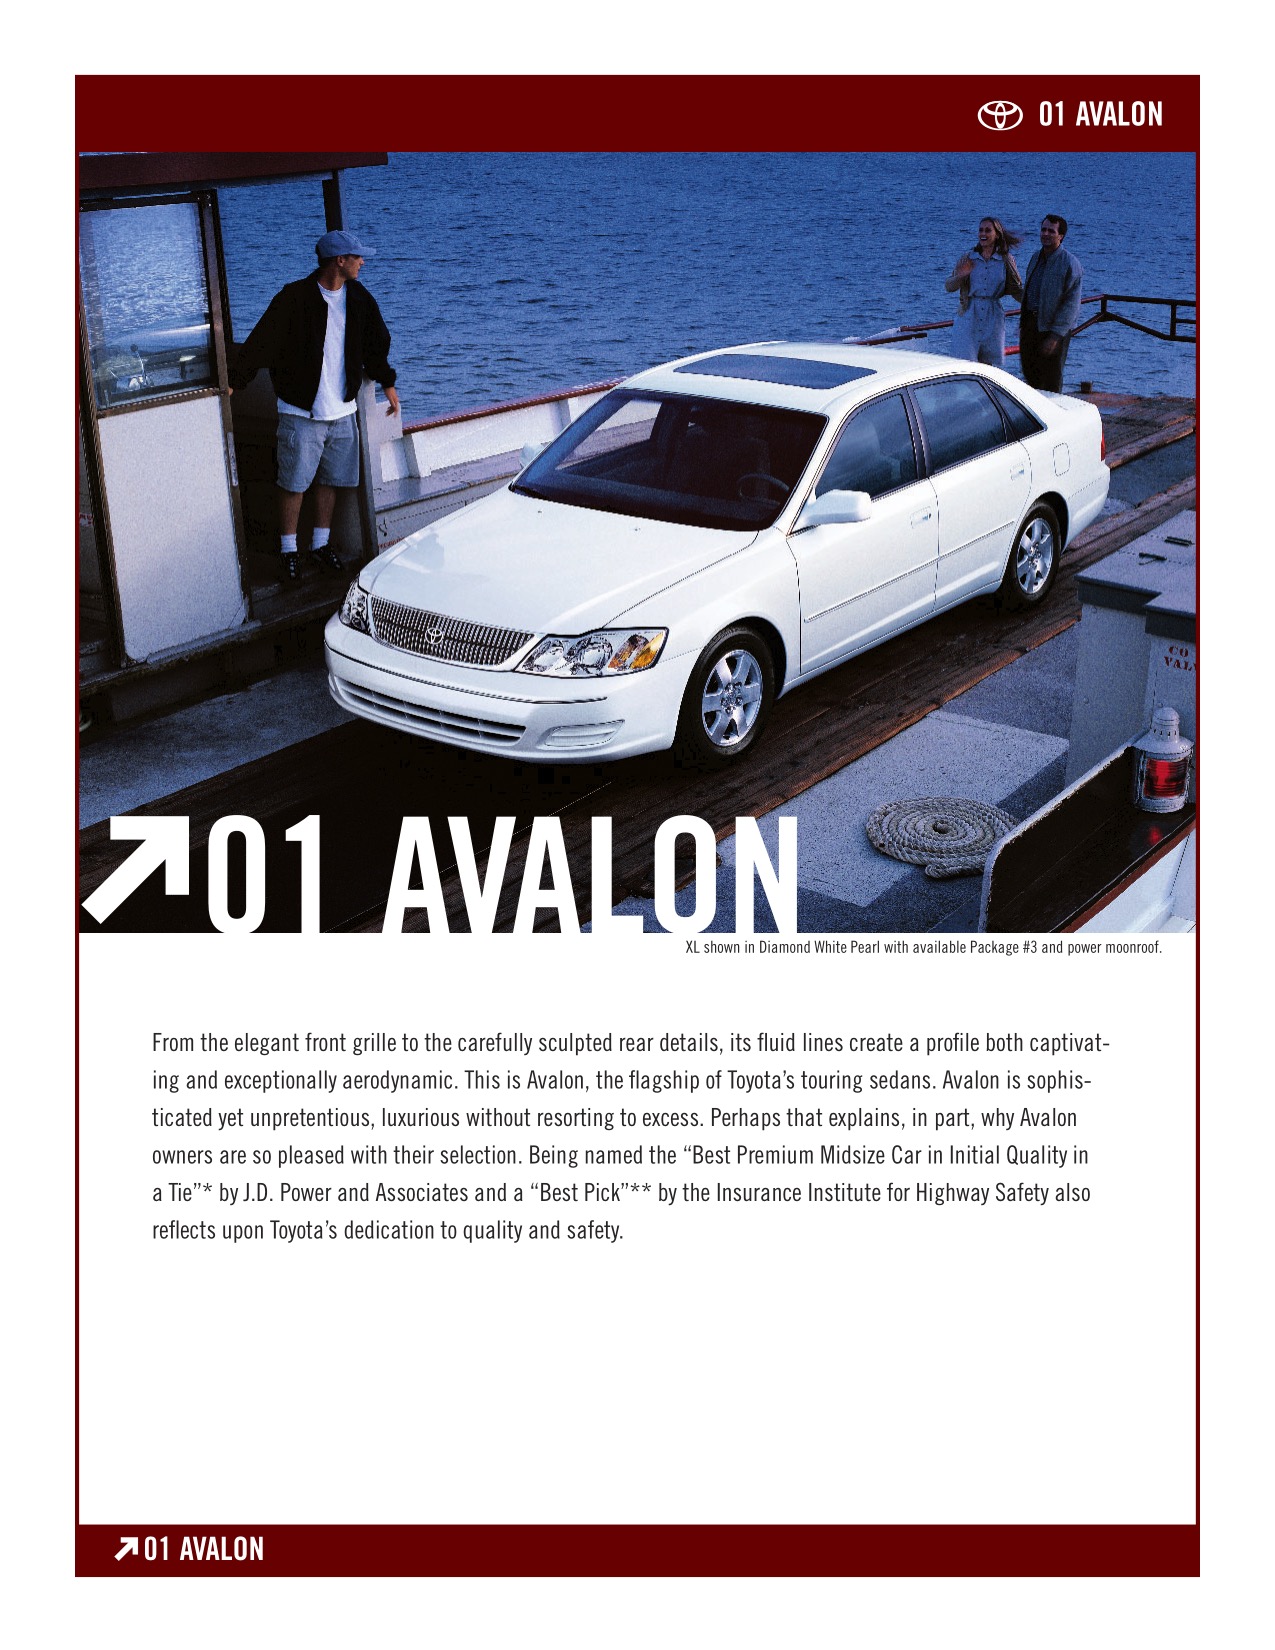 2001 Toyota Avalon Brochure